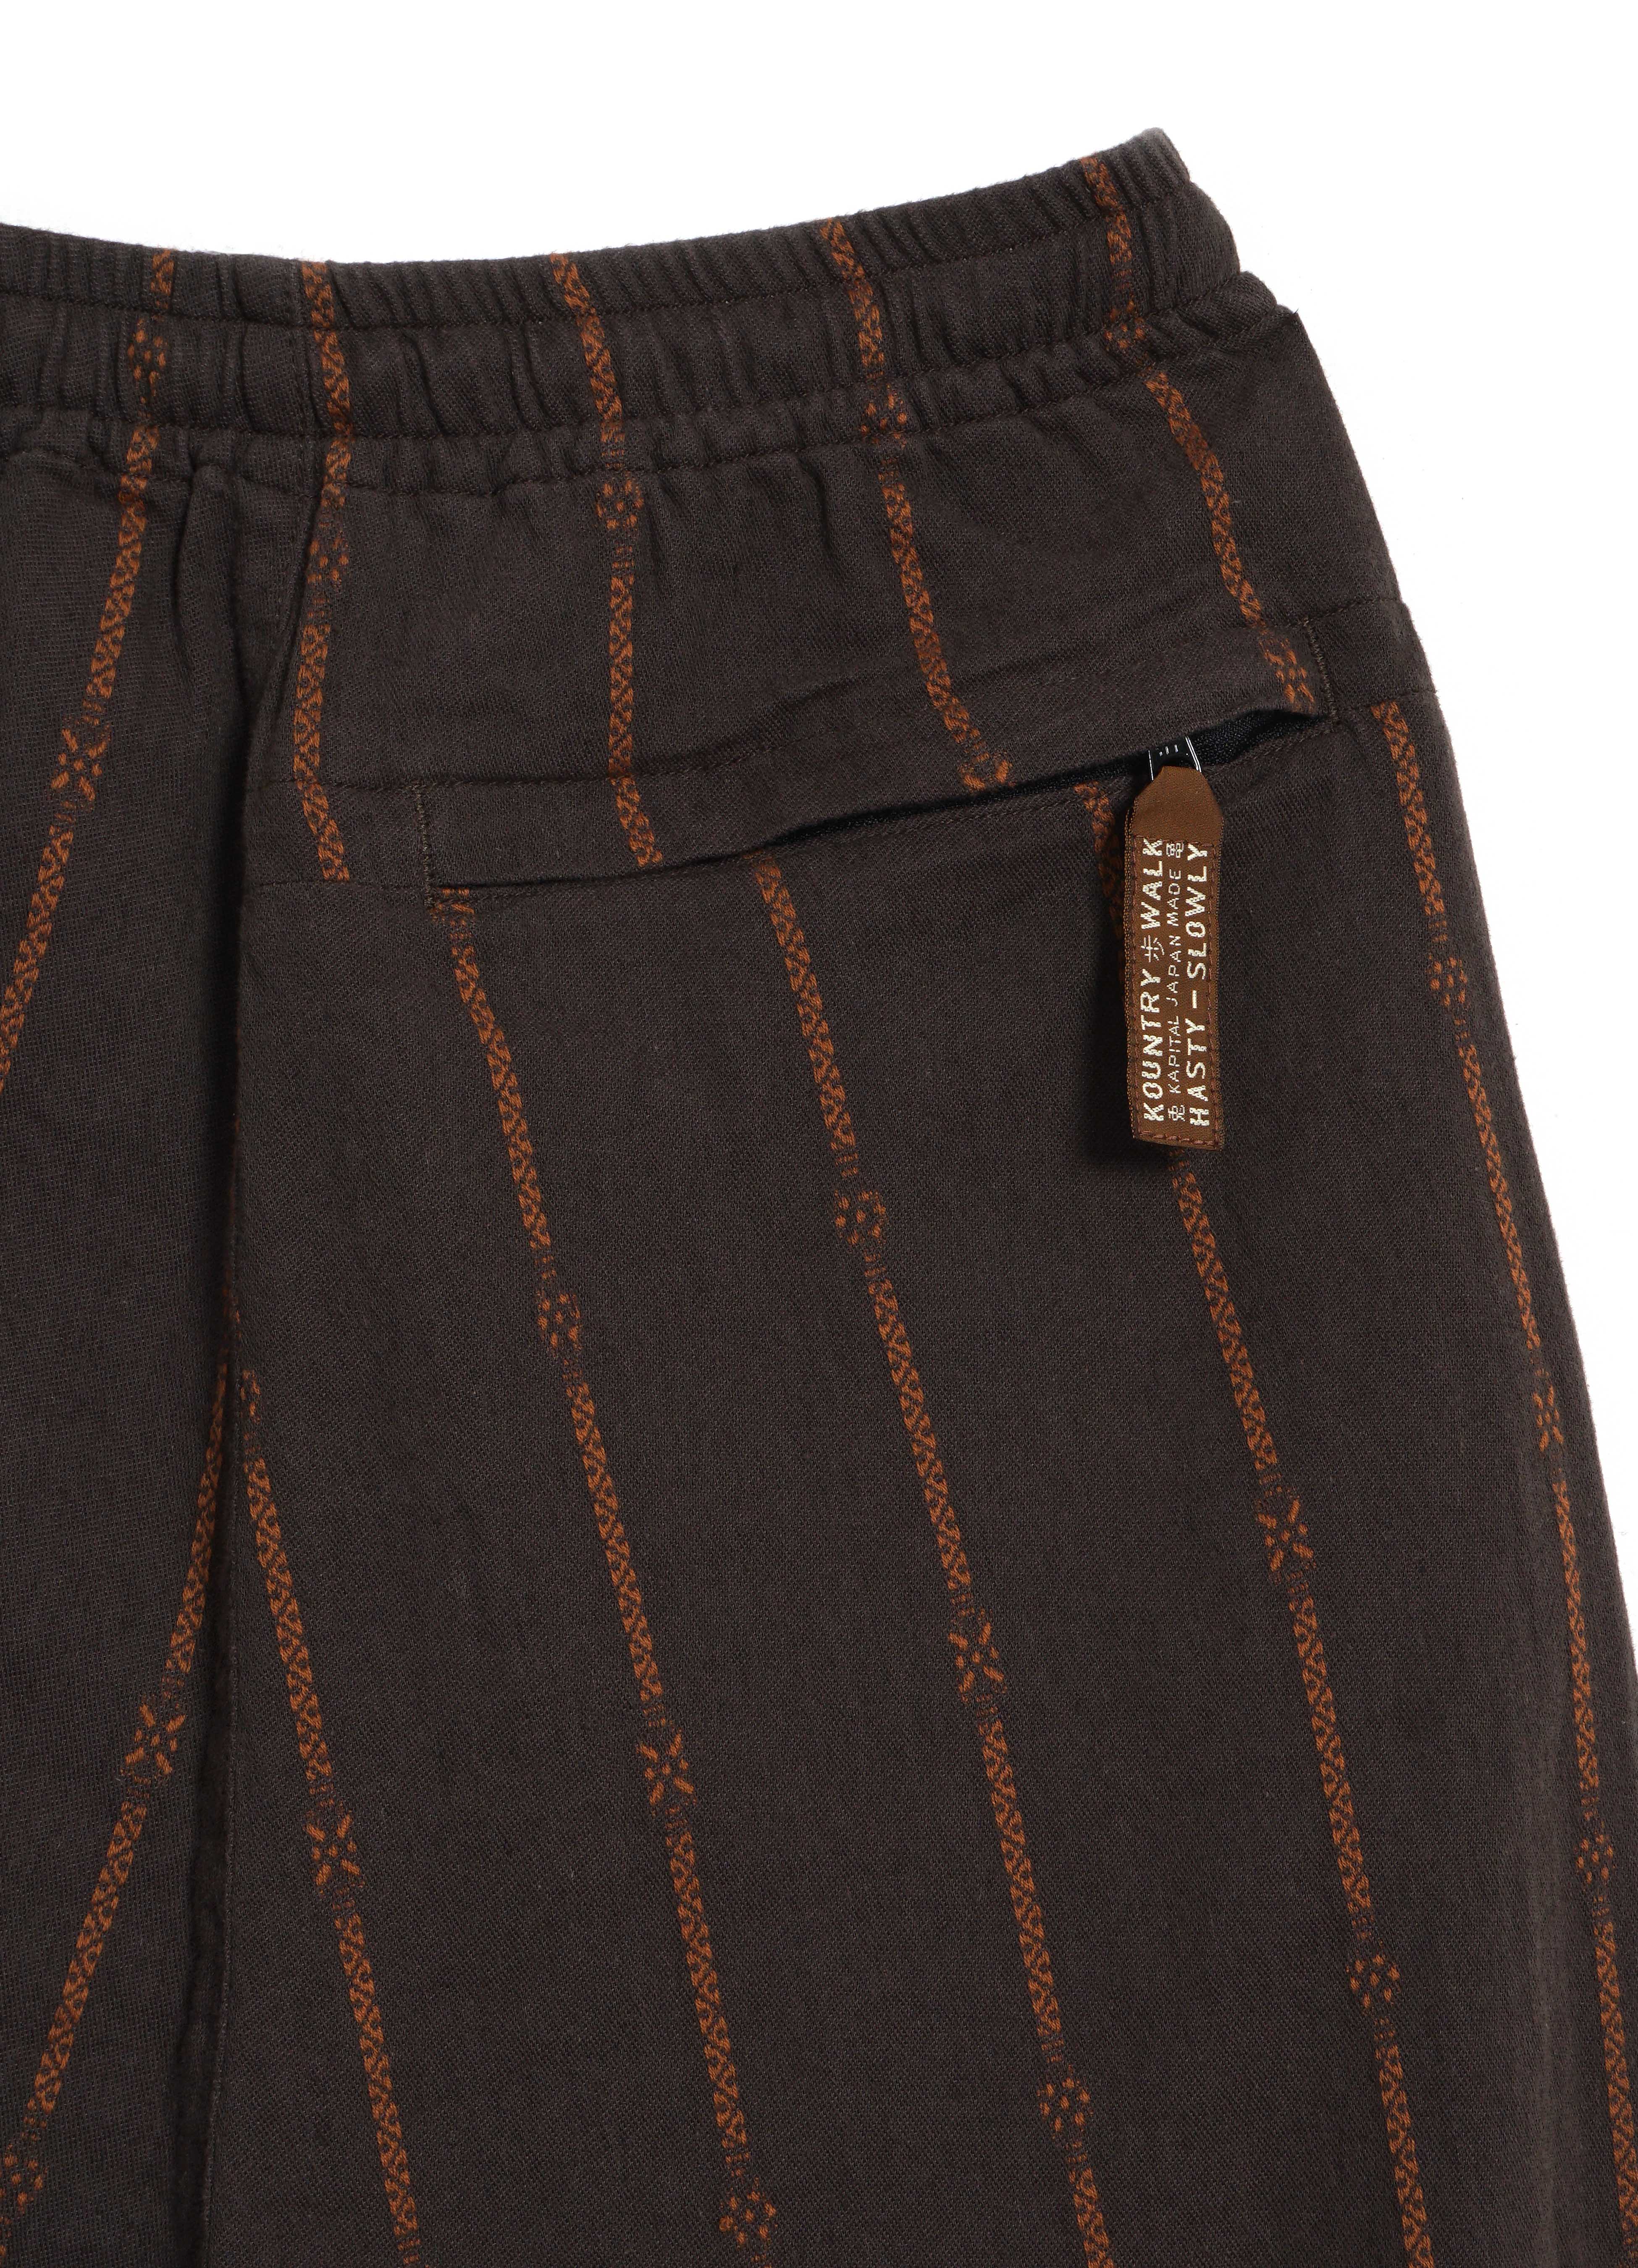 SIAM | Striped Cotton Linen Pants | Dark Brown